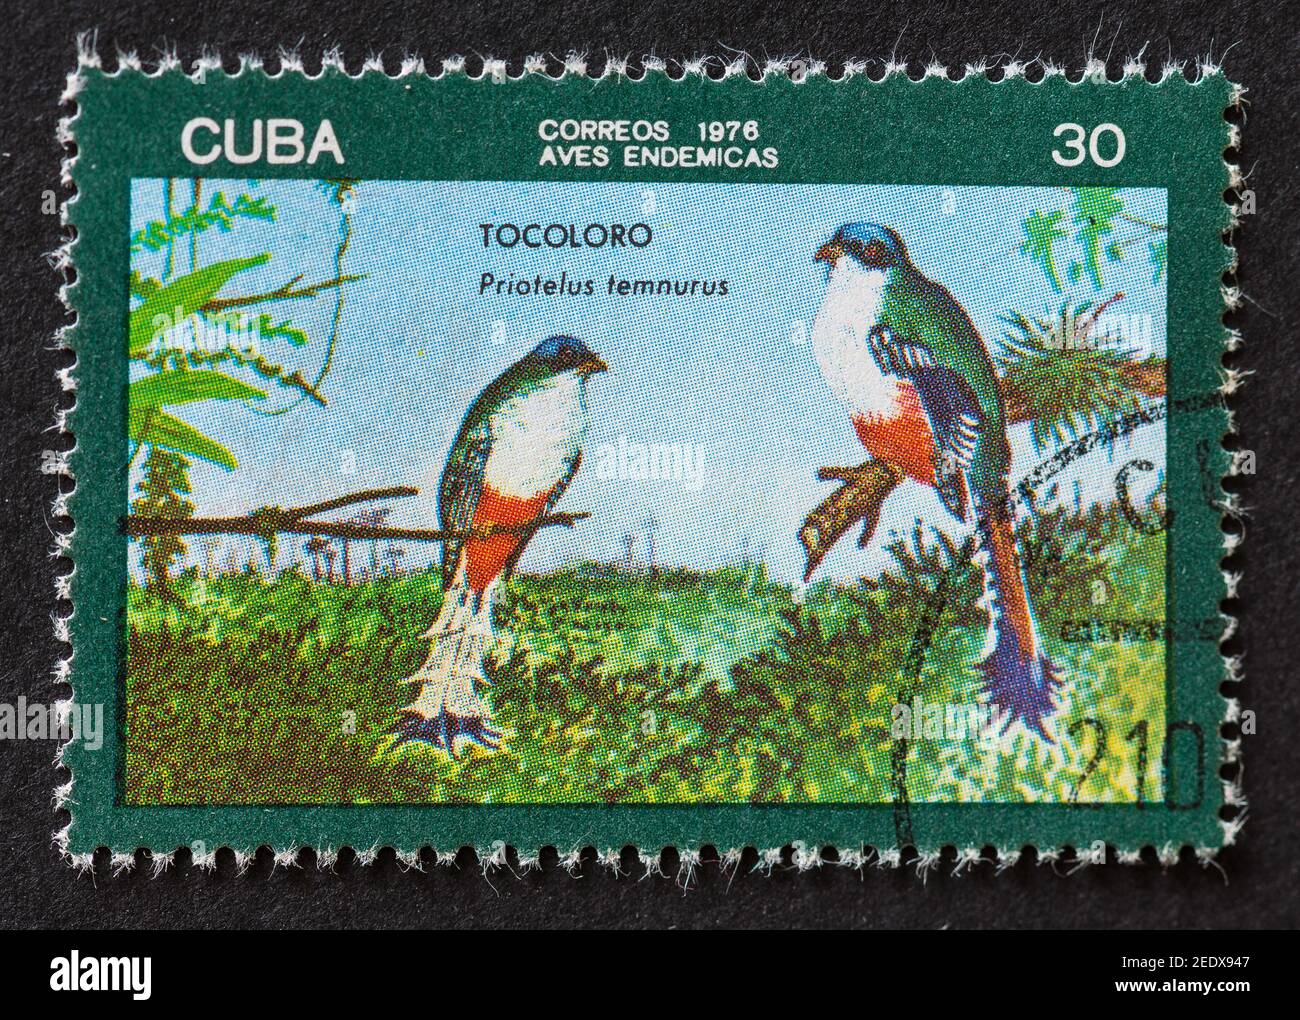 Old vintage Cuban postal stamps Stock Photo